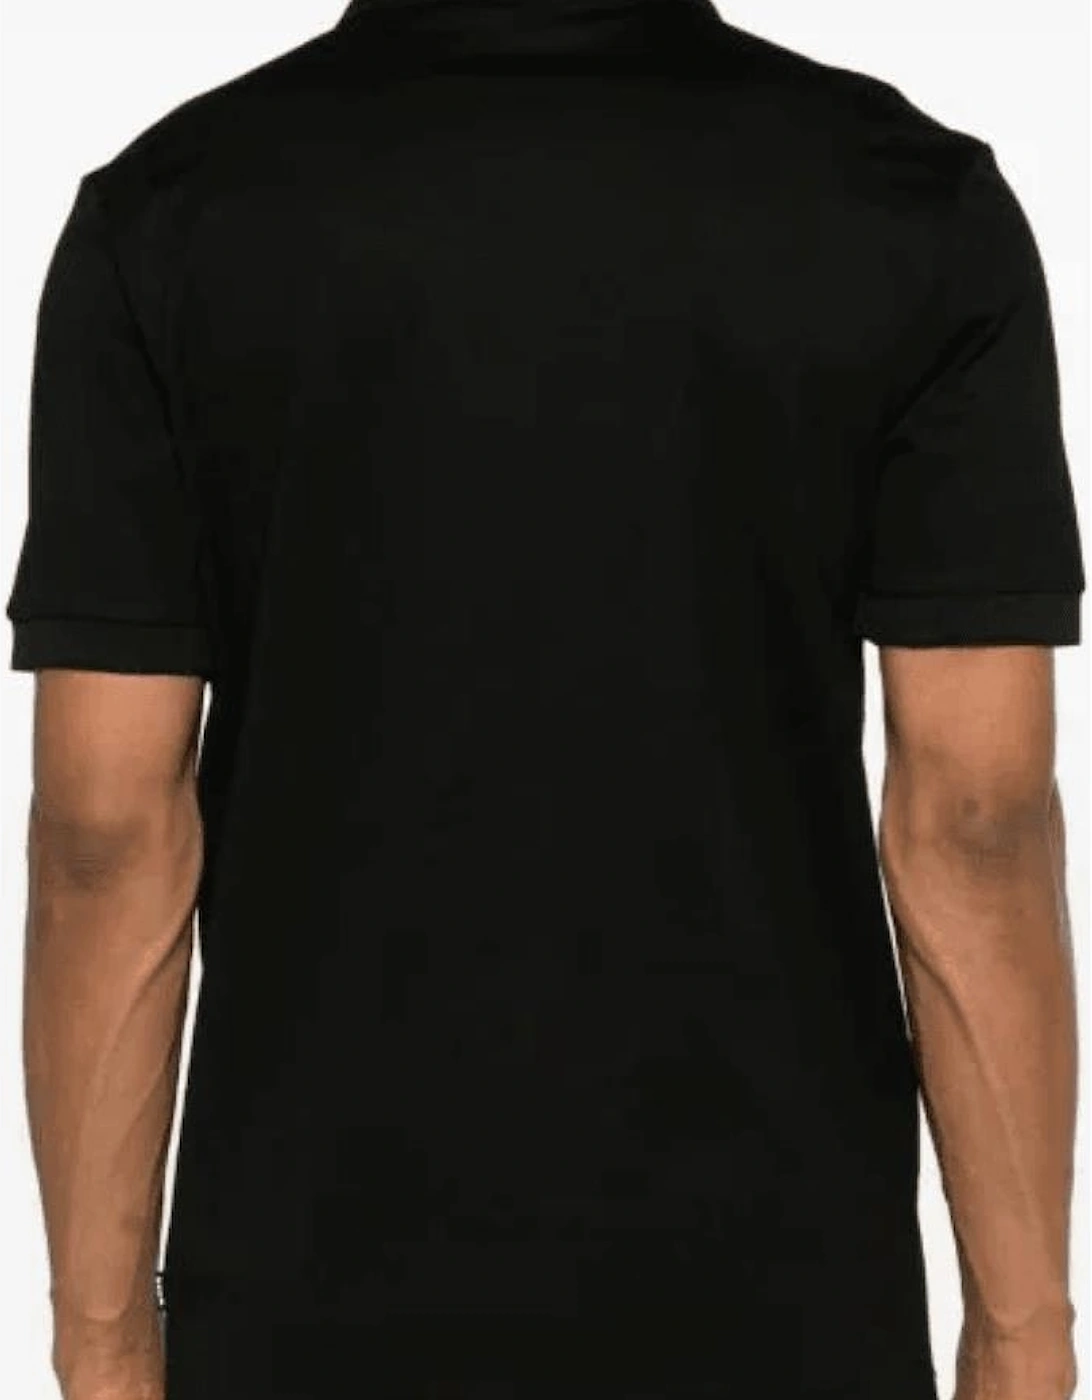 Parlay 423 Regular Fit Black Polo Shirt